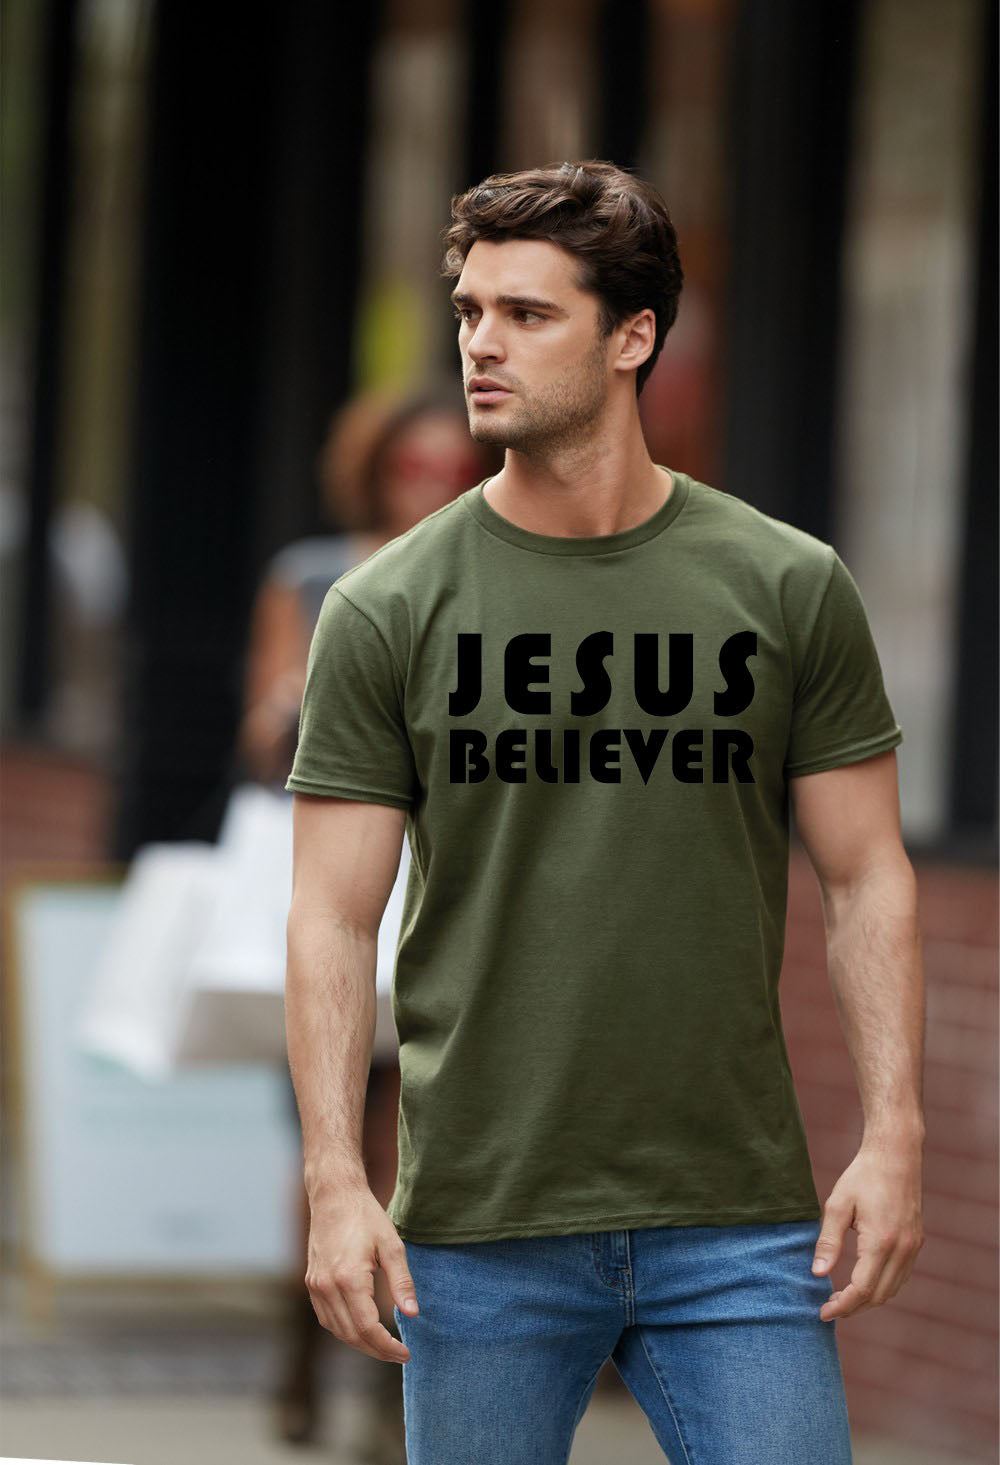 Jesus Believer Evagelism Christian T Shirt - Super Praise Christian